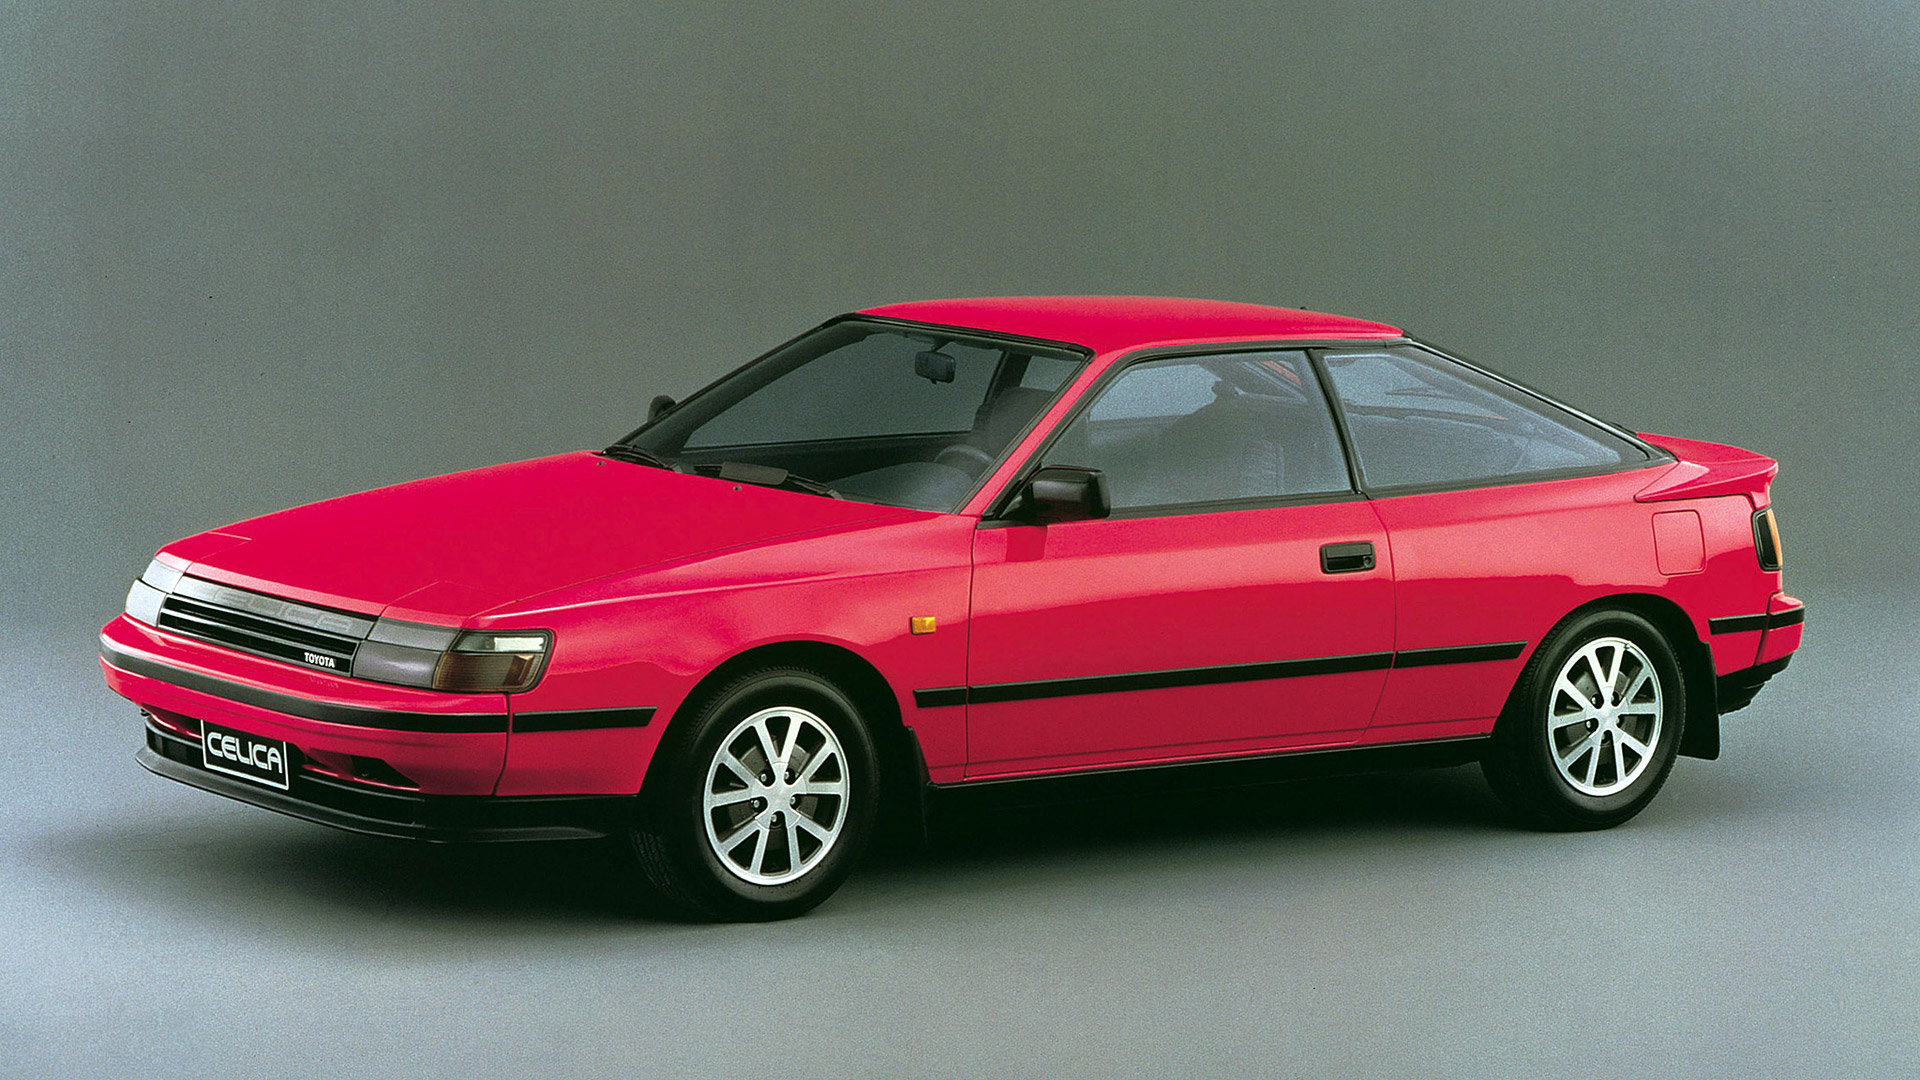  1986 Toyota Celica Wallpaper.